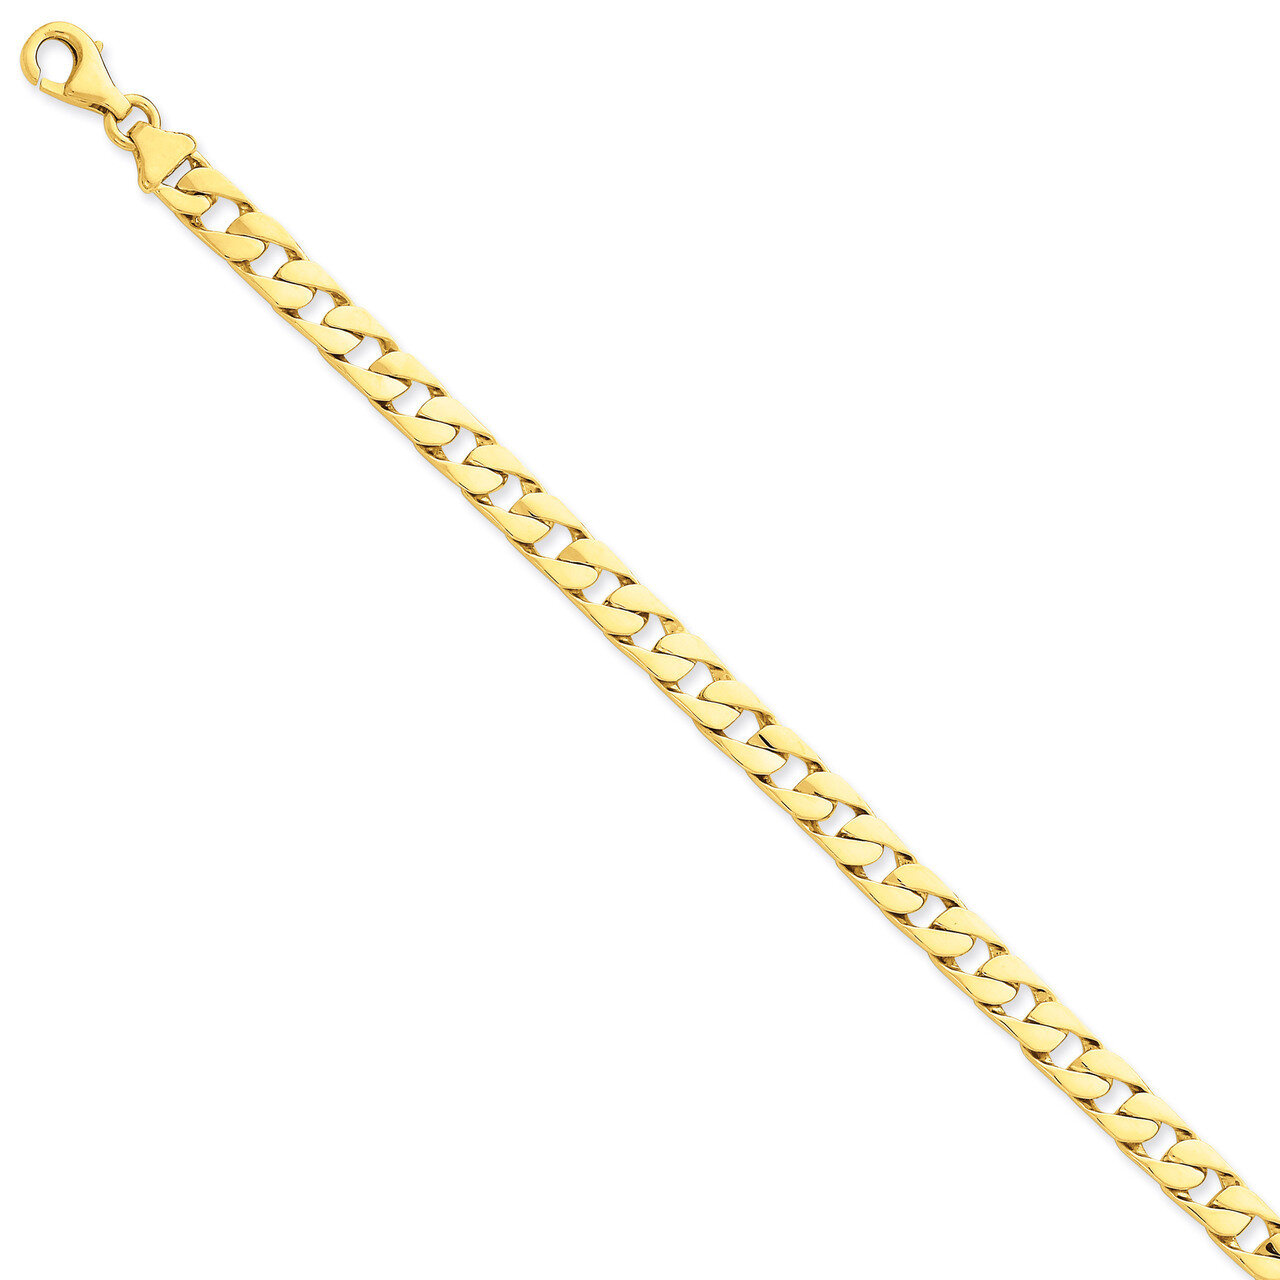 6.5mm Hand-Polished Fancy Link Chain 9 Inch 14k Gold LK147-9